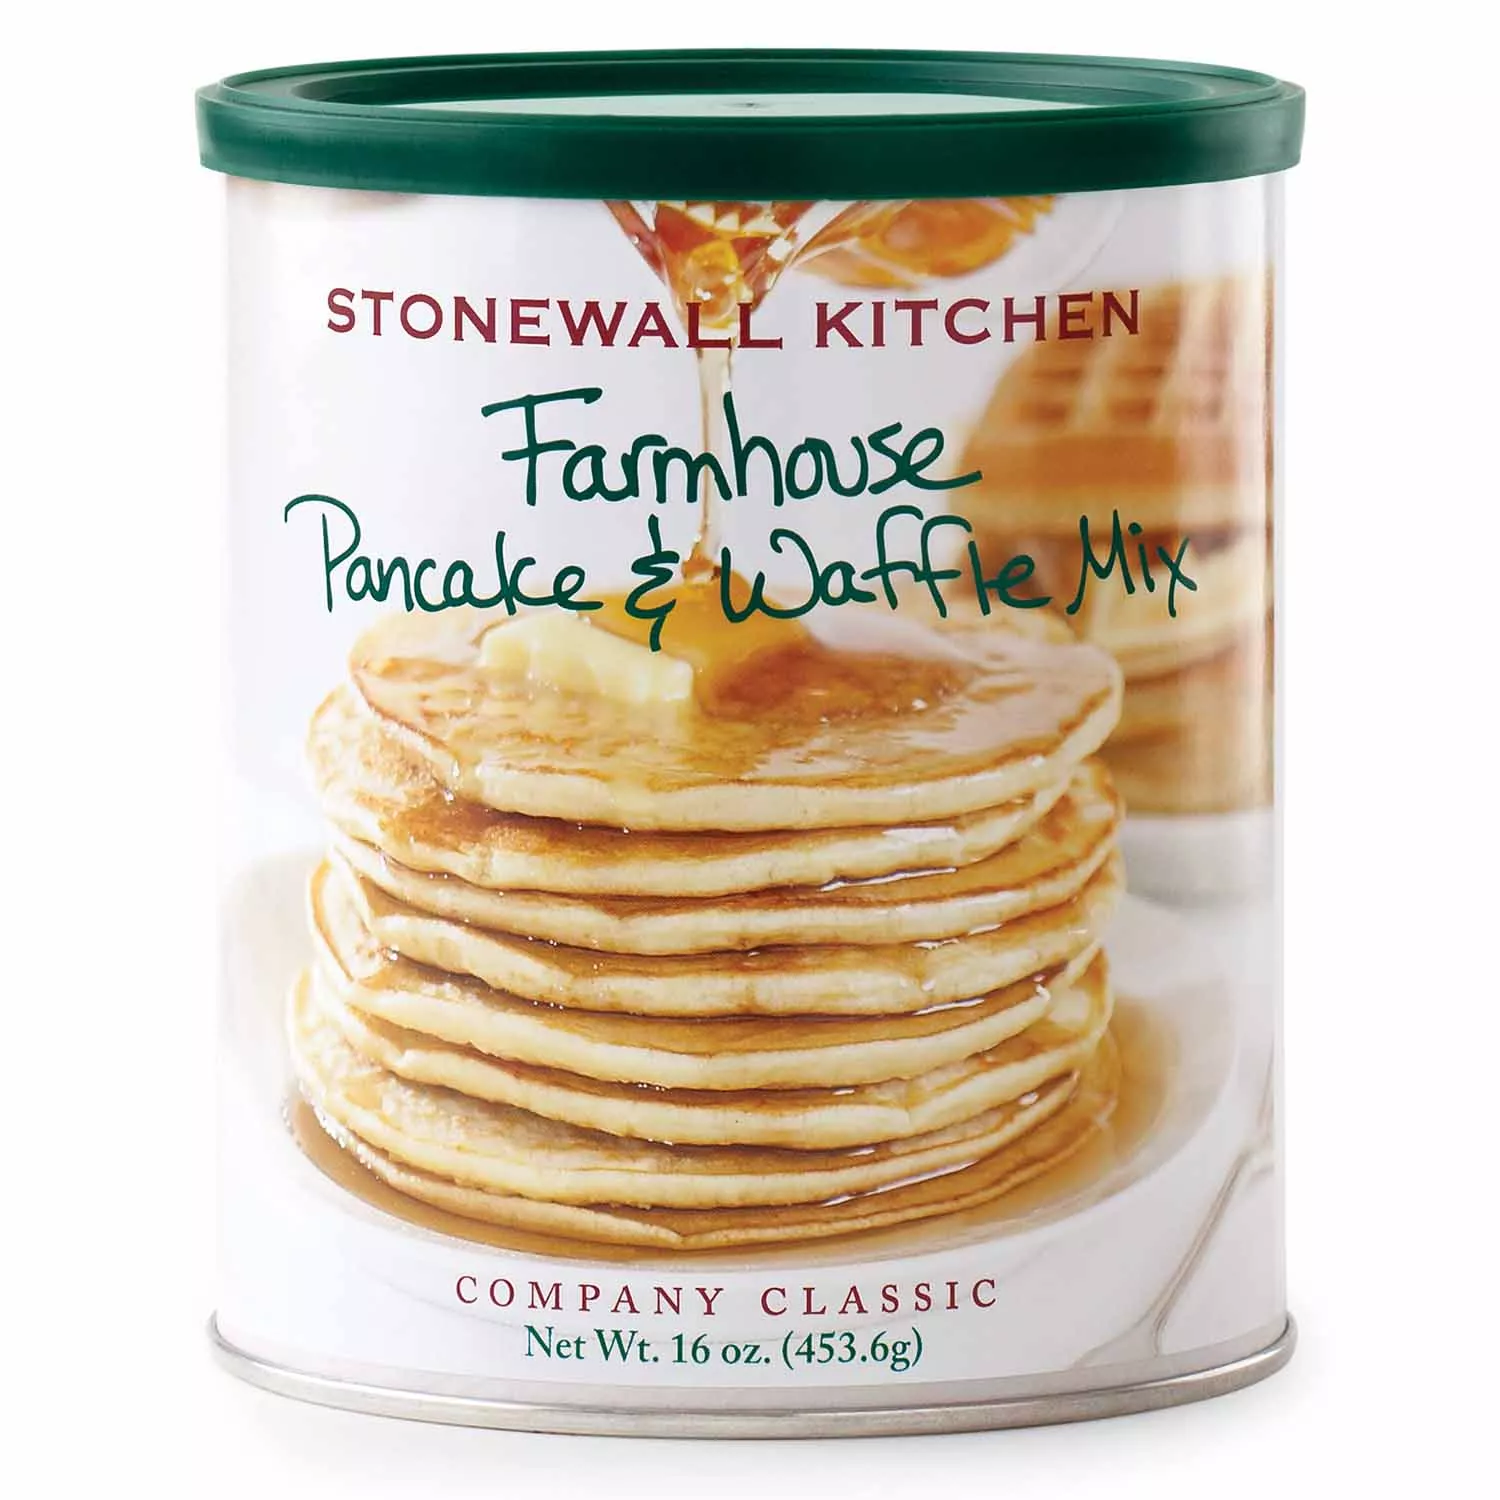 Stonewall Kitchen Farmhouse Pancake & Waffle Mix - 16 oz pack